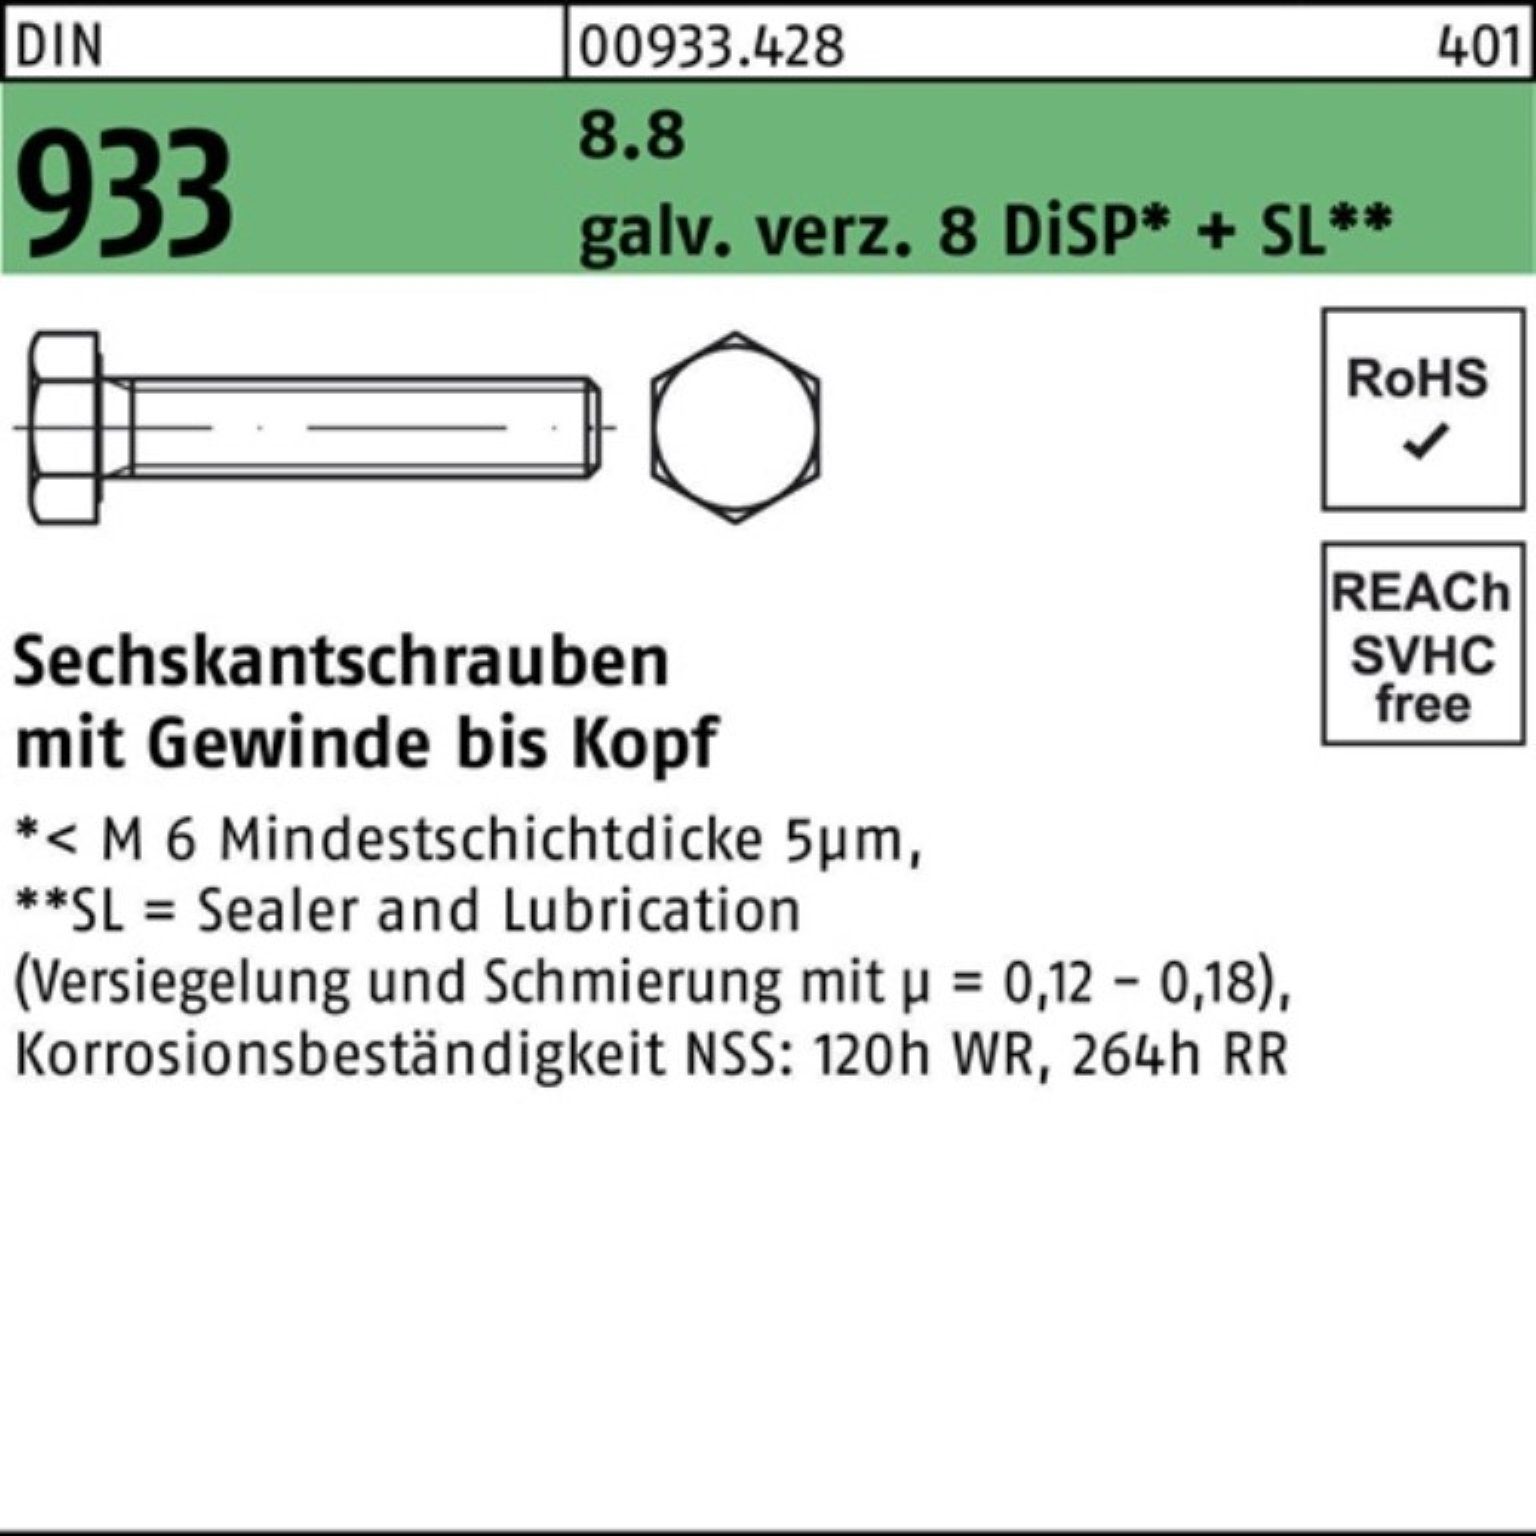 M4x 933 DiSP Pack 8.8 + VG 50 Sechskantschraube Reyher 500er Sechskantschraube gal SL DIN 16 Zn